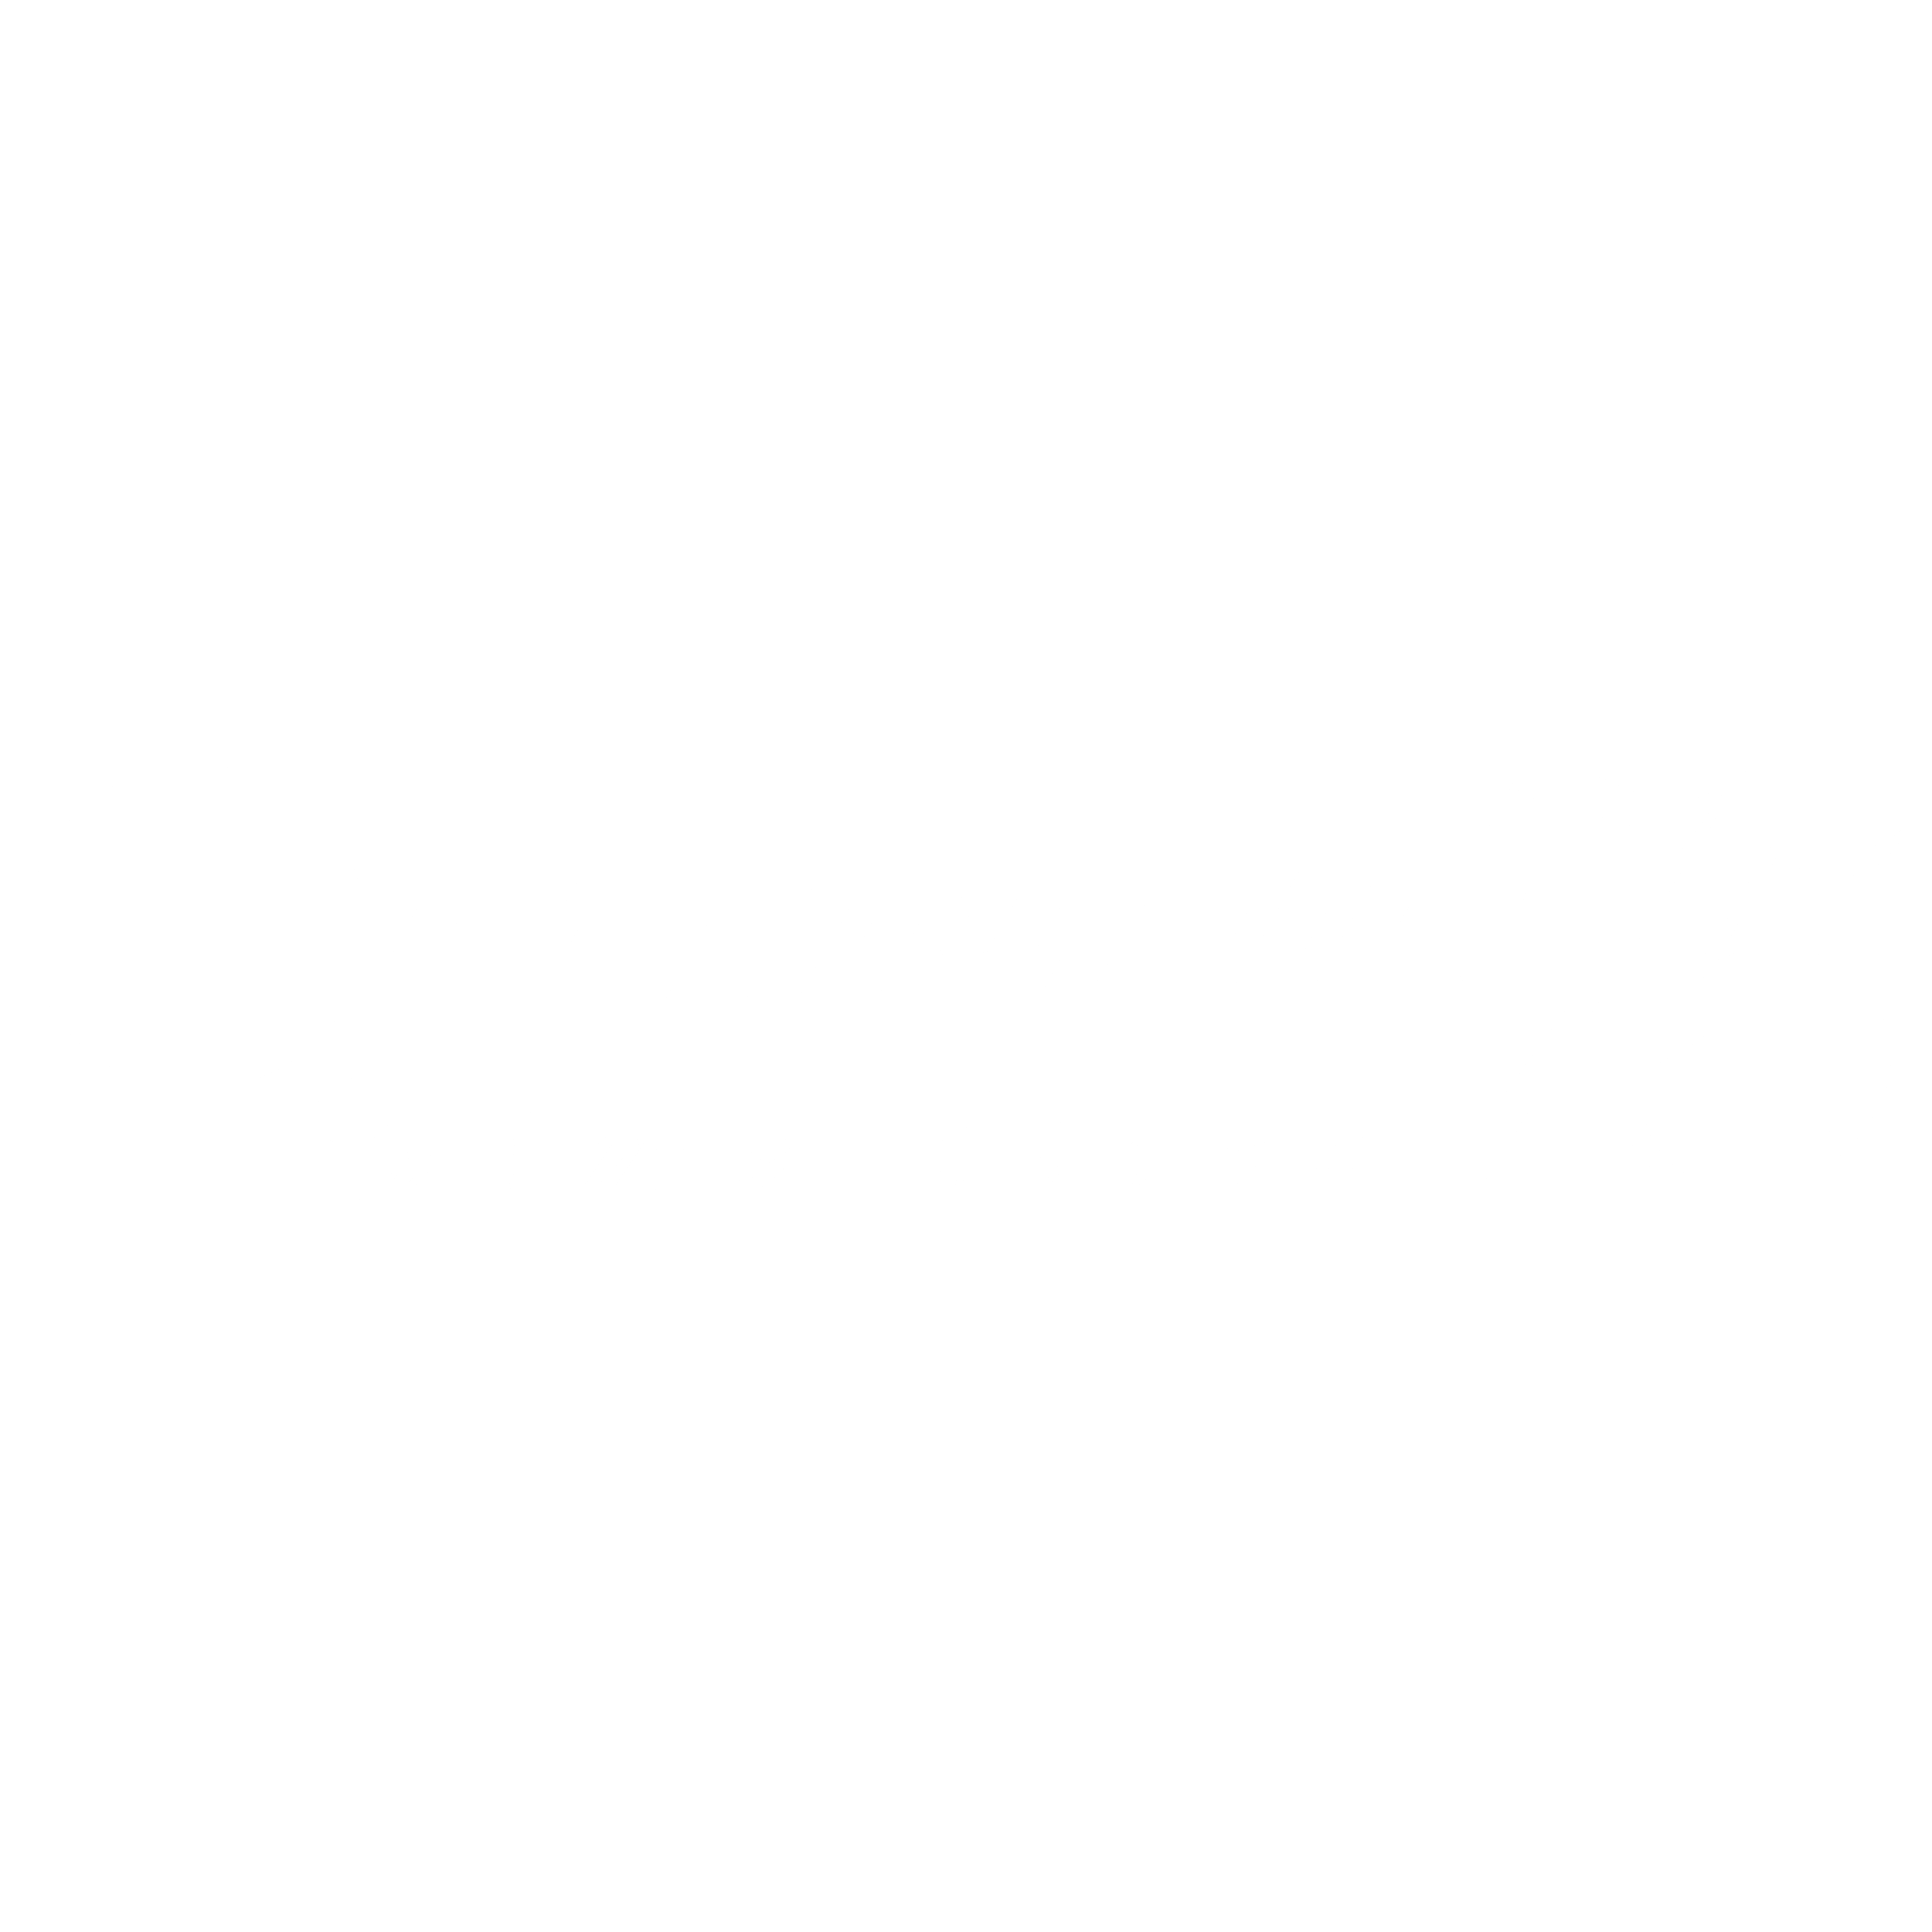 Finnair Logo - Finnair Logo PNG Transparent & SVG Vector - Freebie Supply